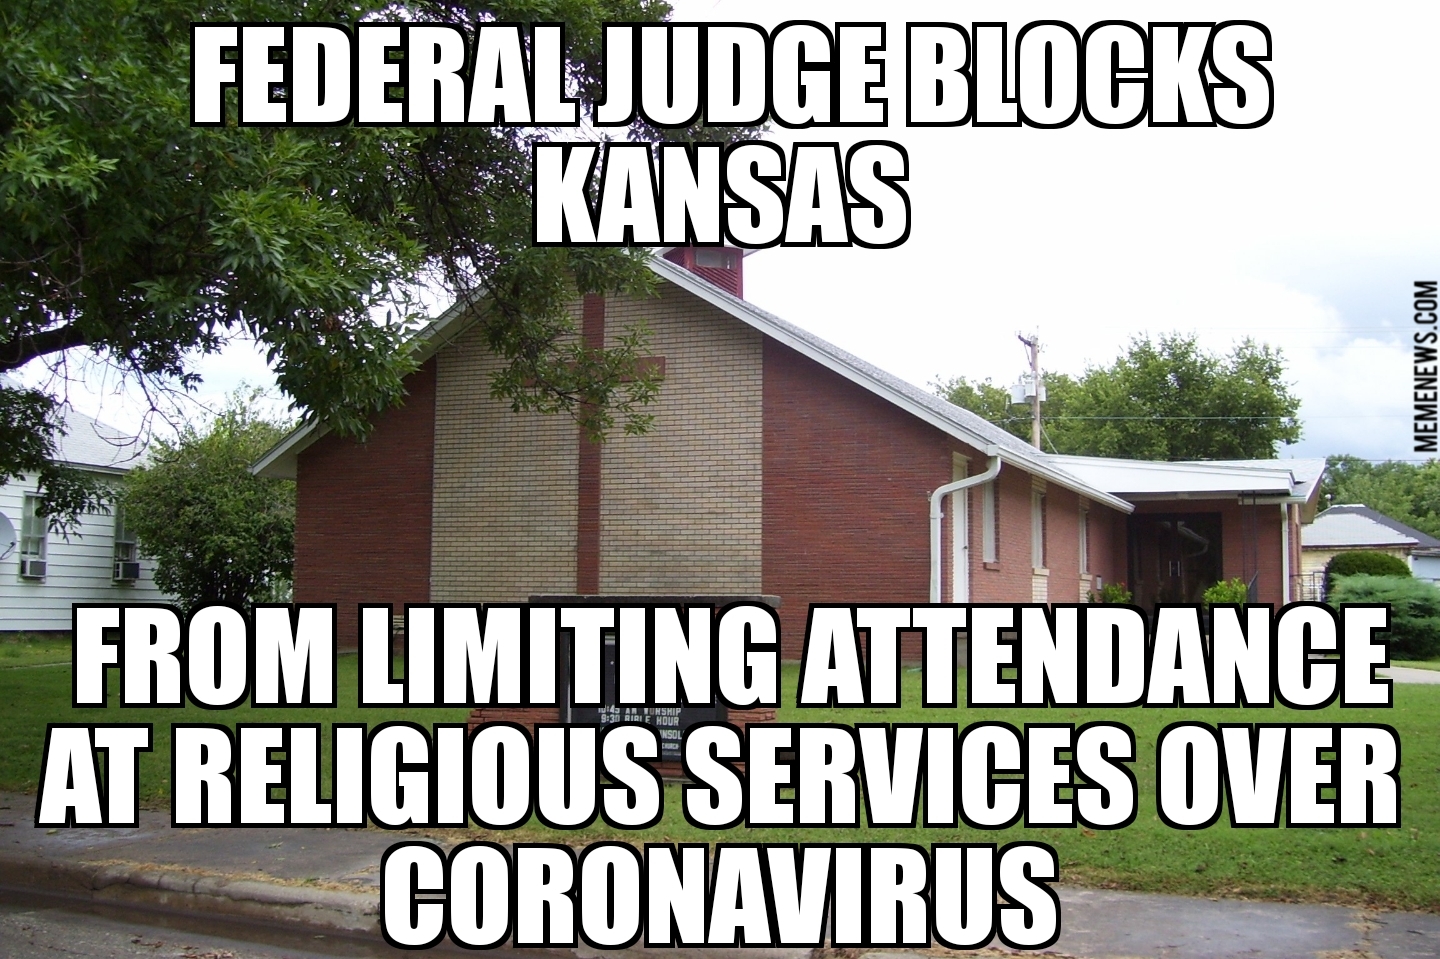 Judge blocks Kansas from limiting religious services